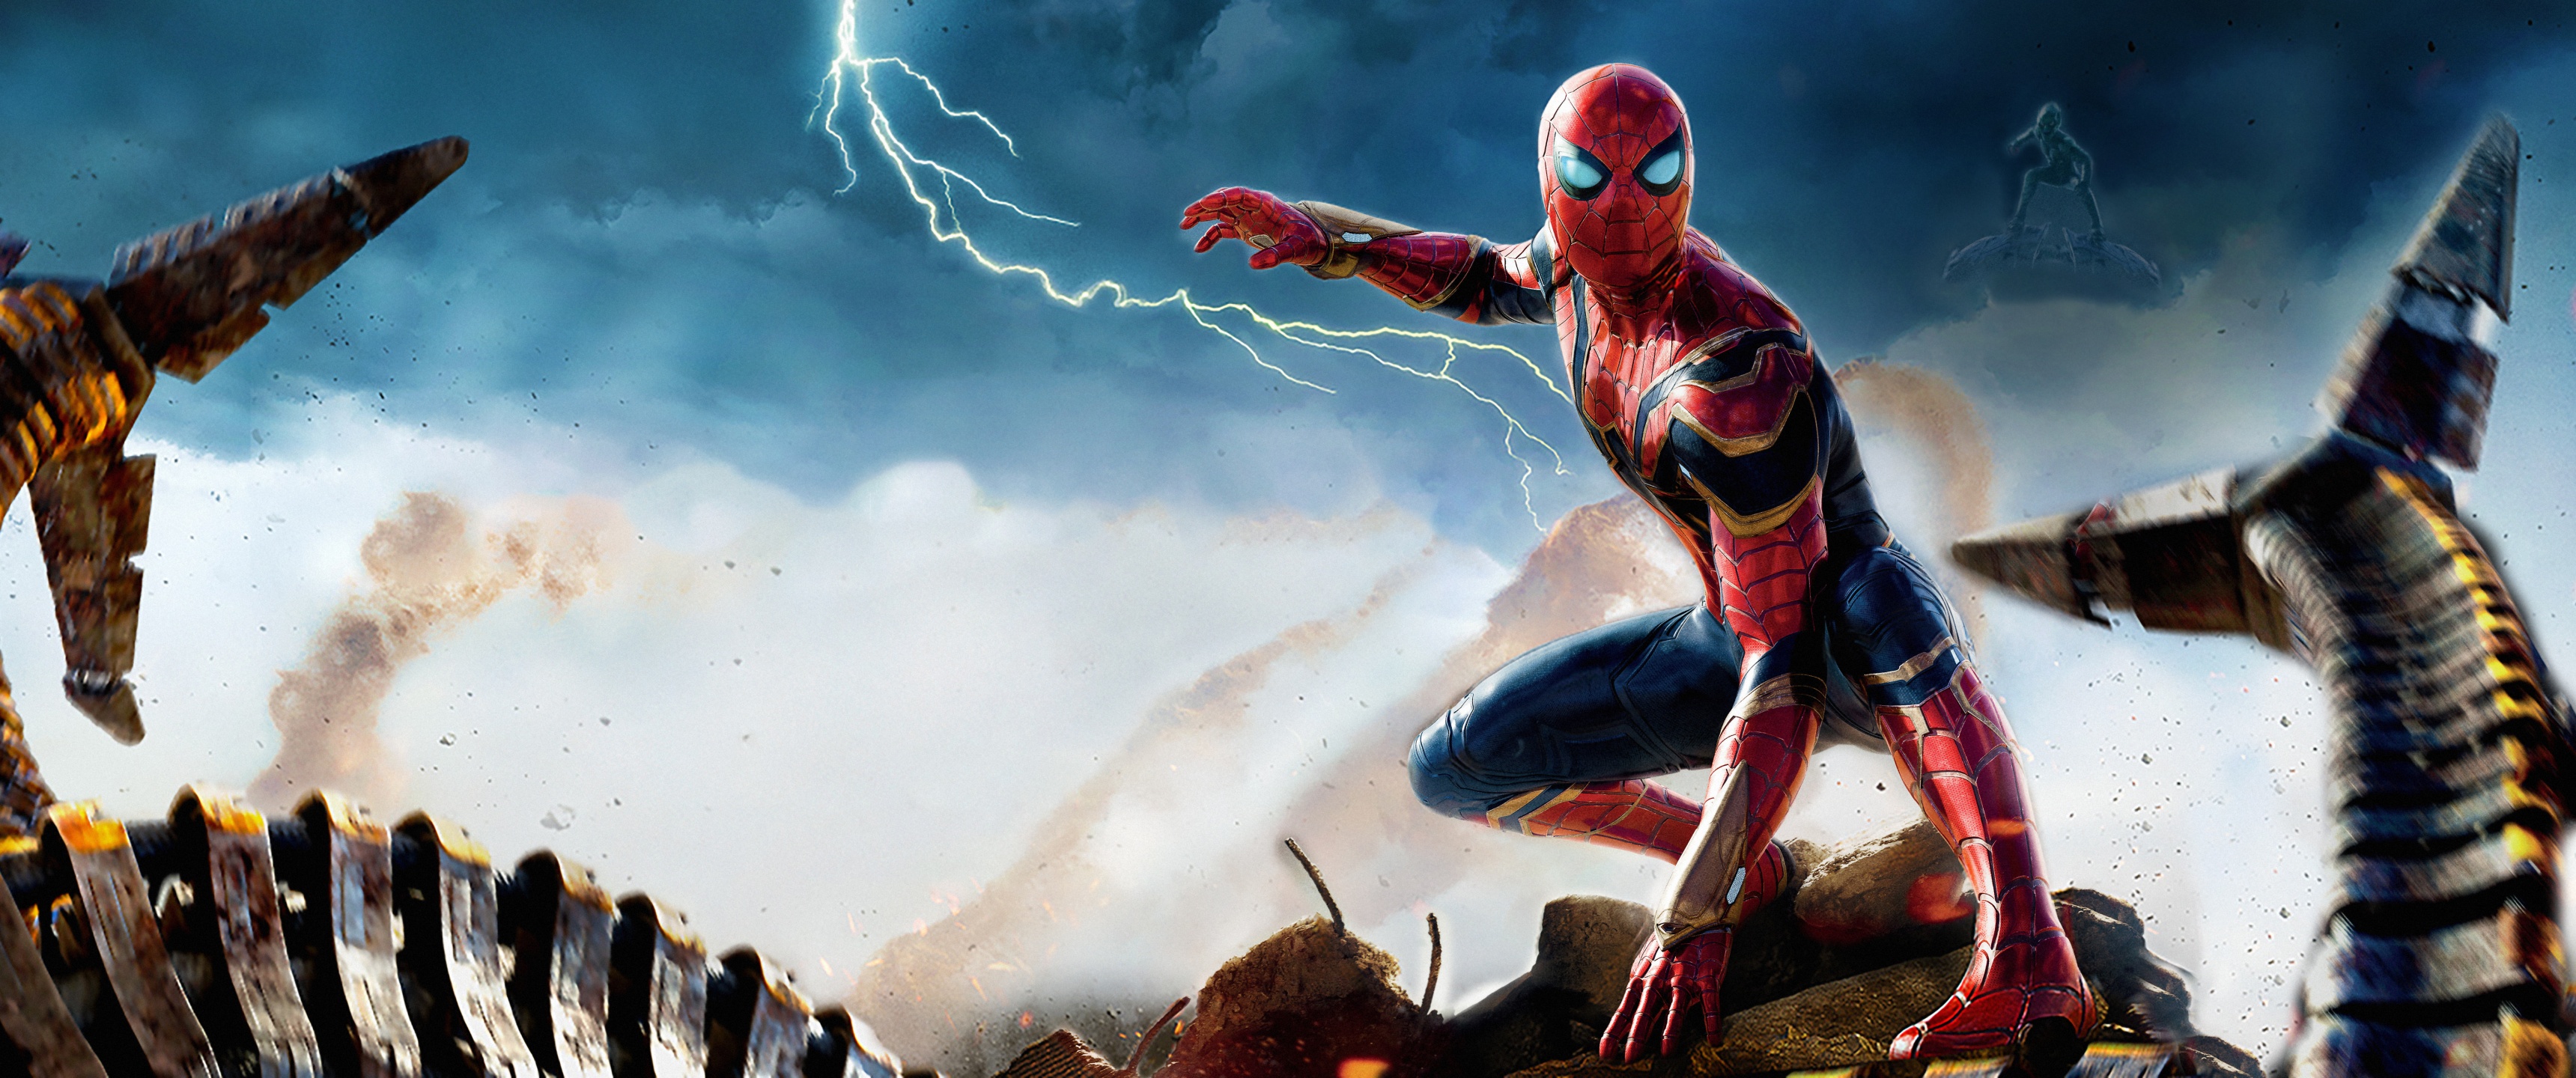 Spider-Man: No Way Home Wallpaper 4K, 2021 Movies, Movies, #6992